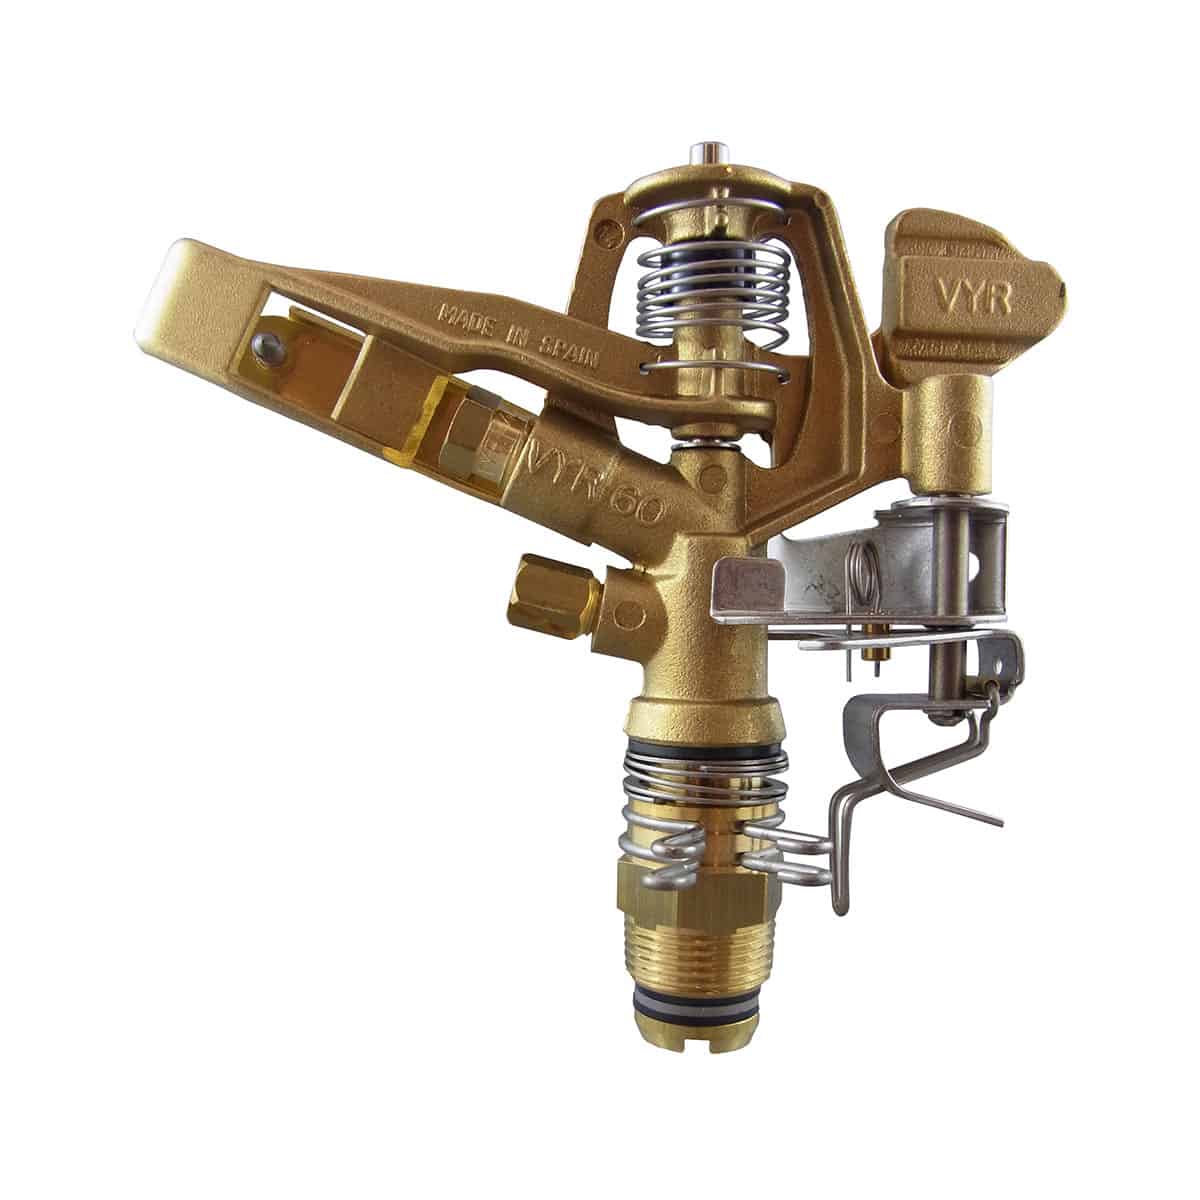 Vyrsa Impact Sprinkler VYR-60 20mm W/4.4mm 2.4R Nozzle